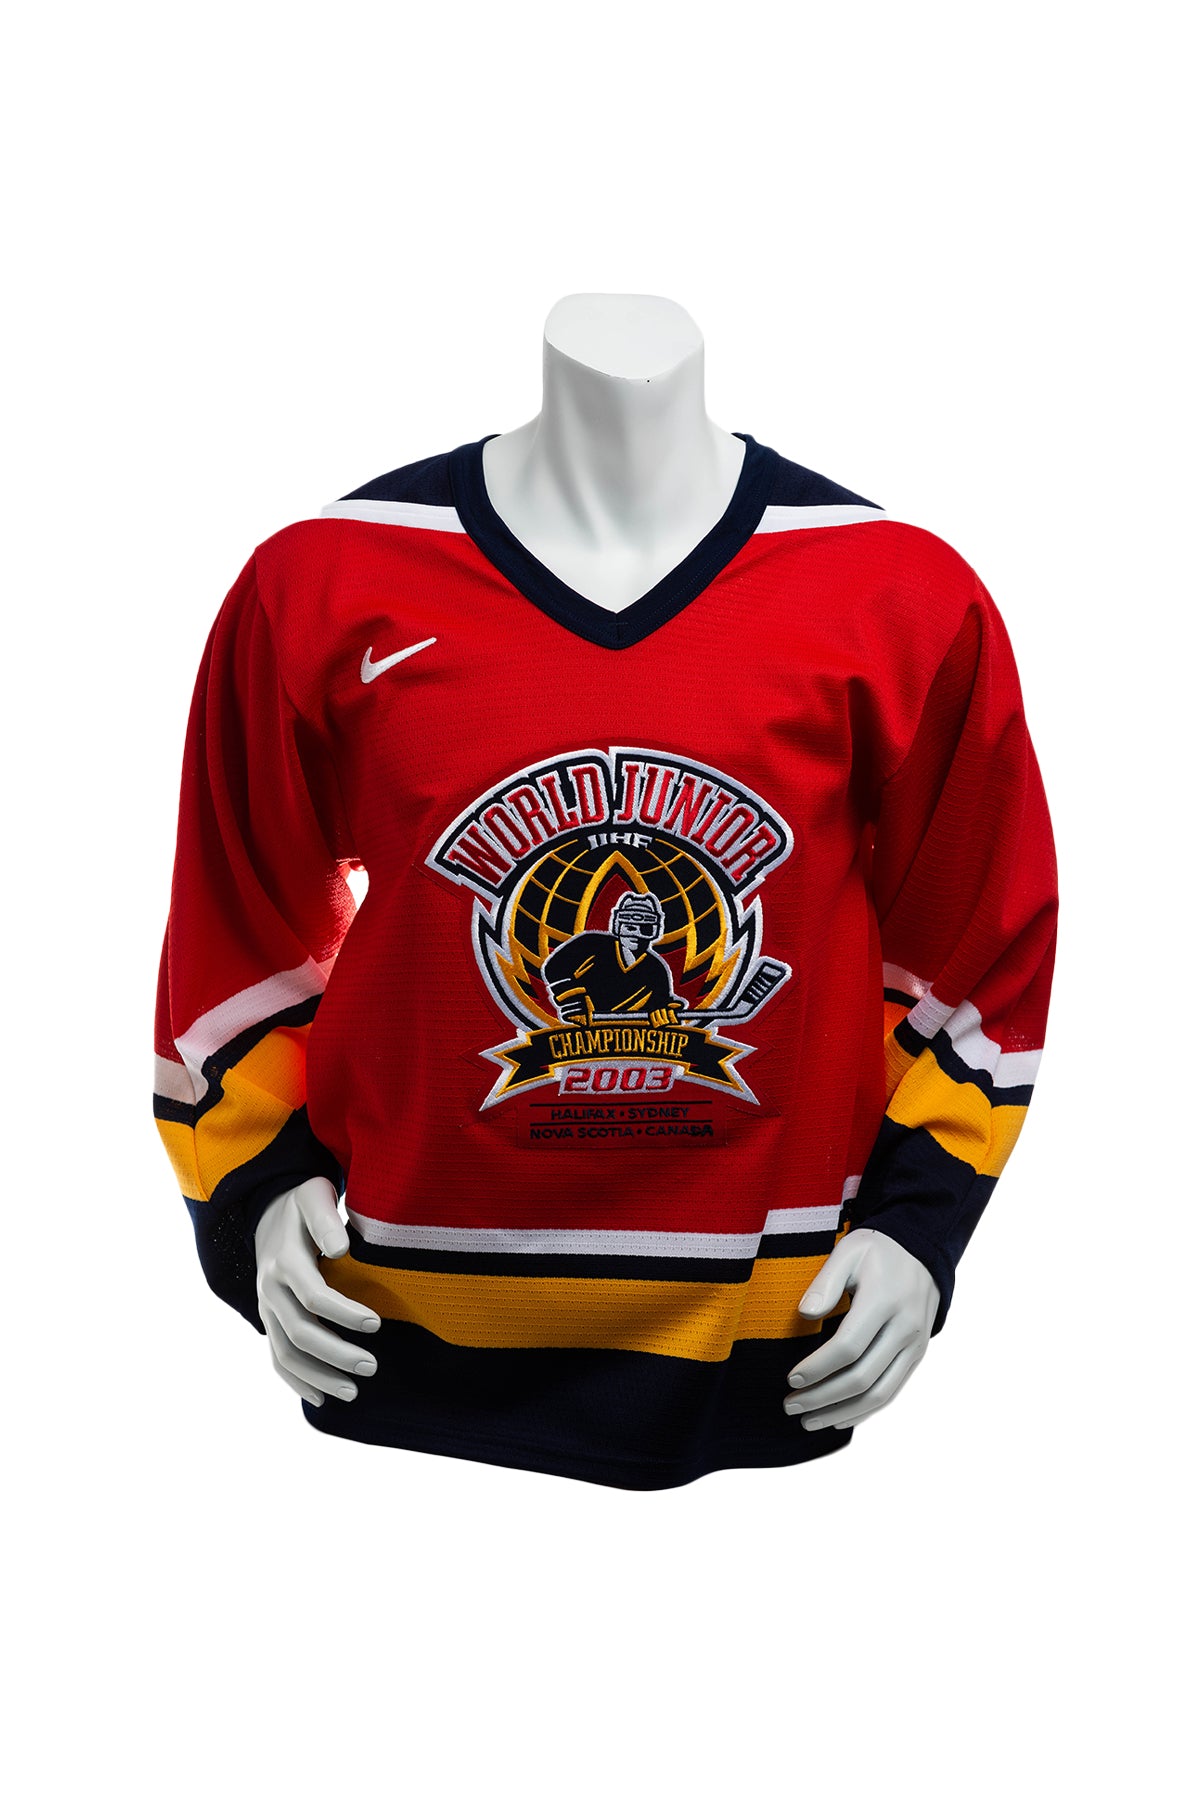 Vintage 2003 World Junior Ice Hockey Championship IIHF Jersey Used Size XL